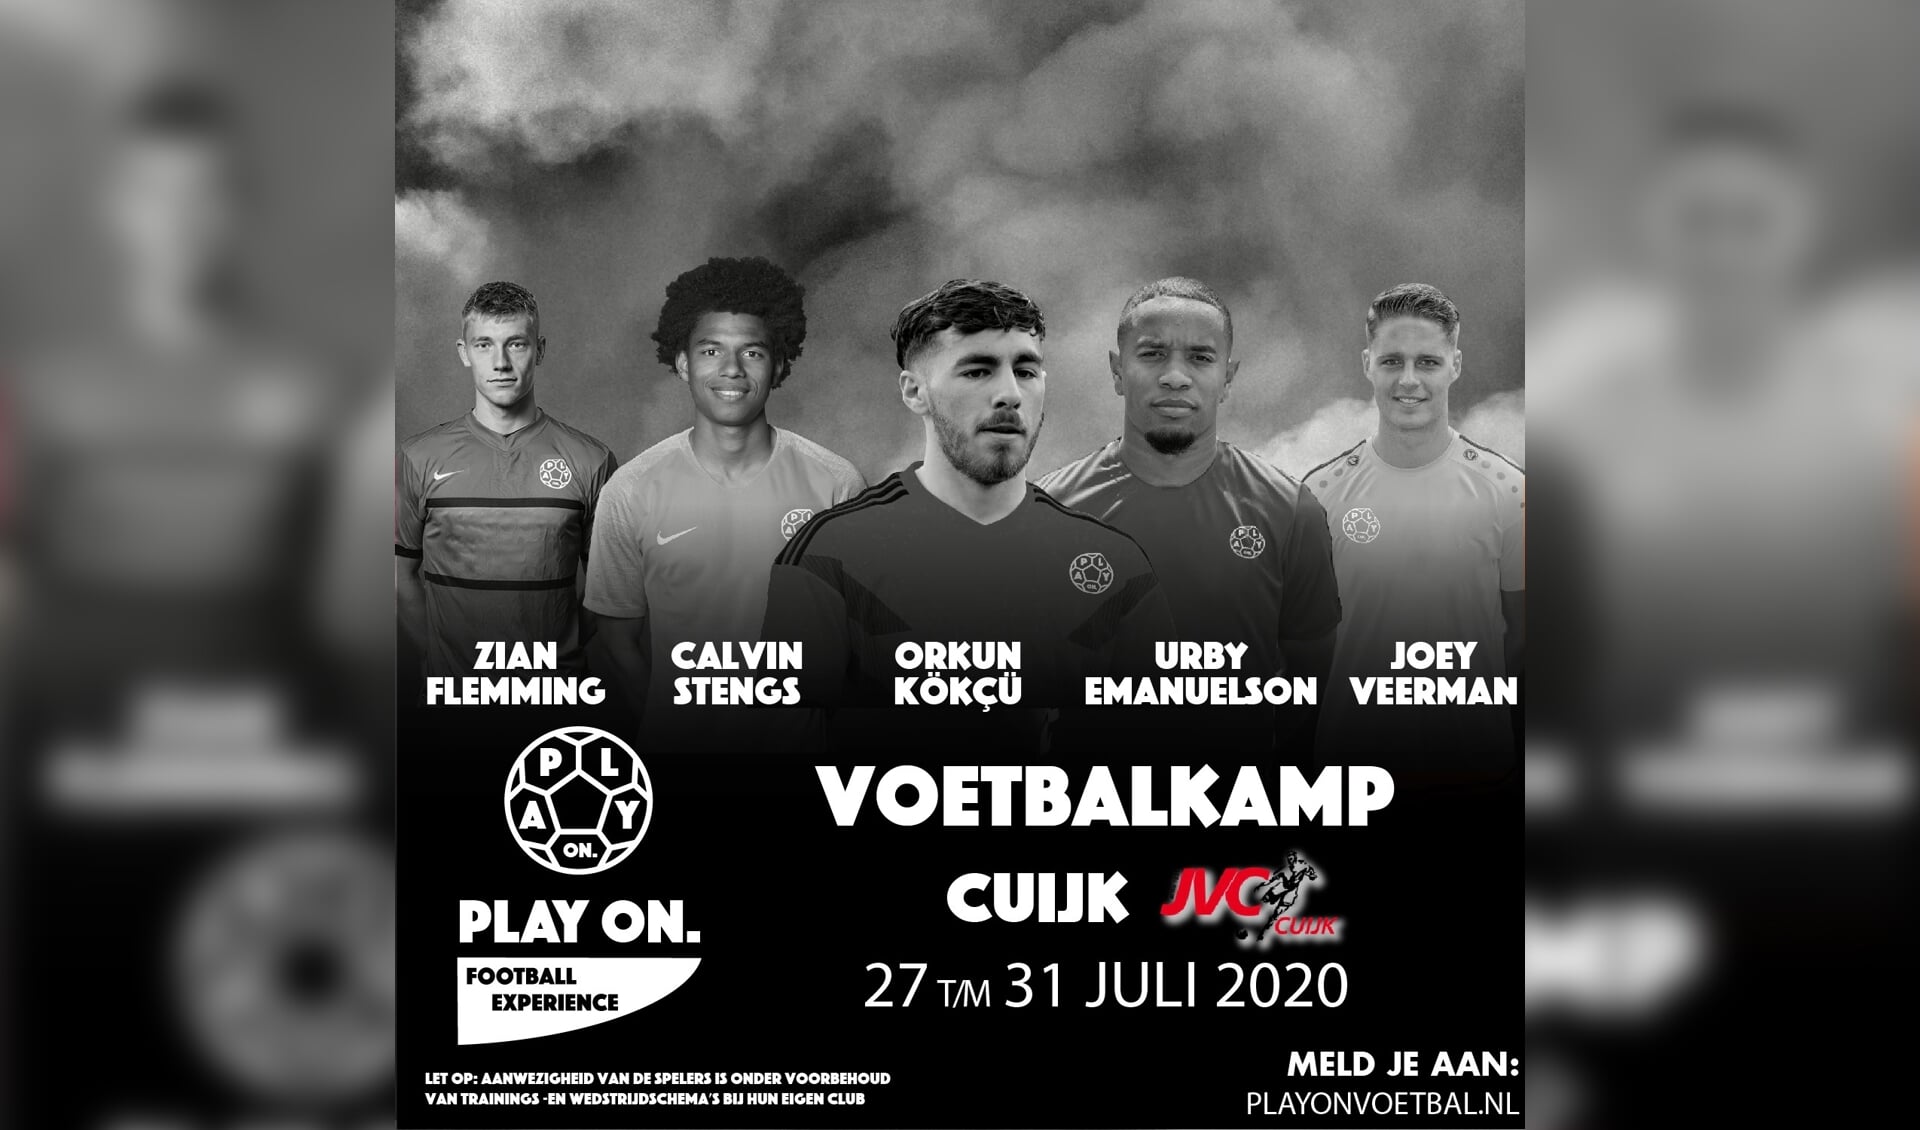 Eredivisievoetballers Orkun Kökcü, Calvin Stengs, Urby Emanuelson, Zian Flemming en Joey Veerman komen naar Cuijk!